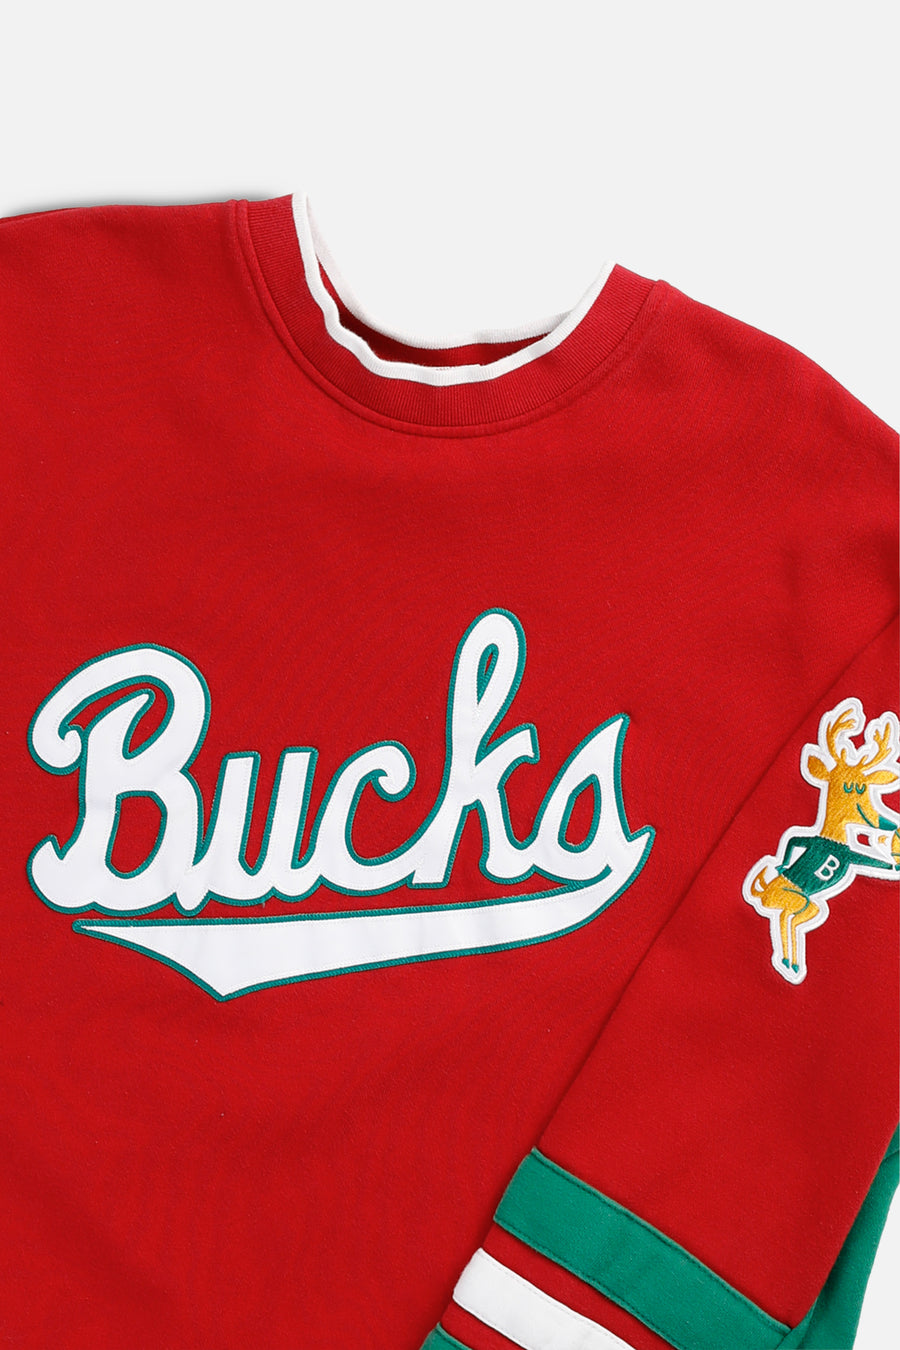 Vintage Milwaukee Bucks NBA Sweatshirt - XL